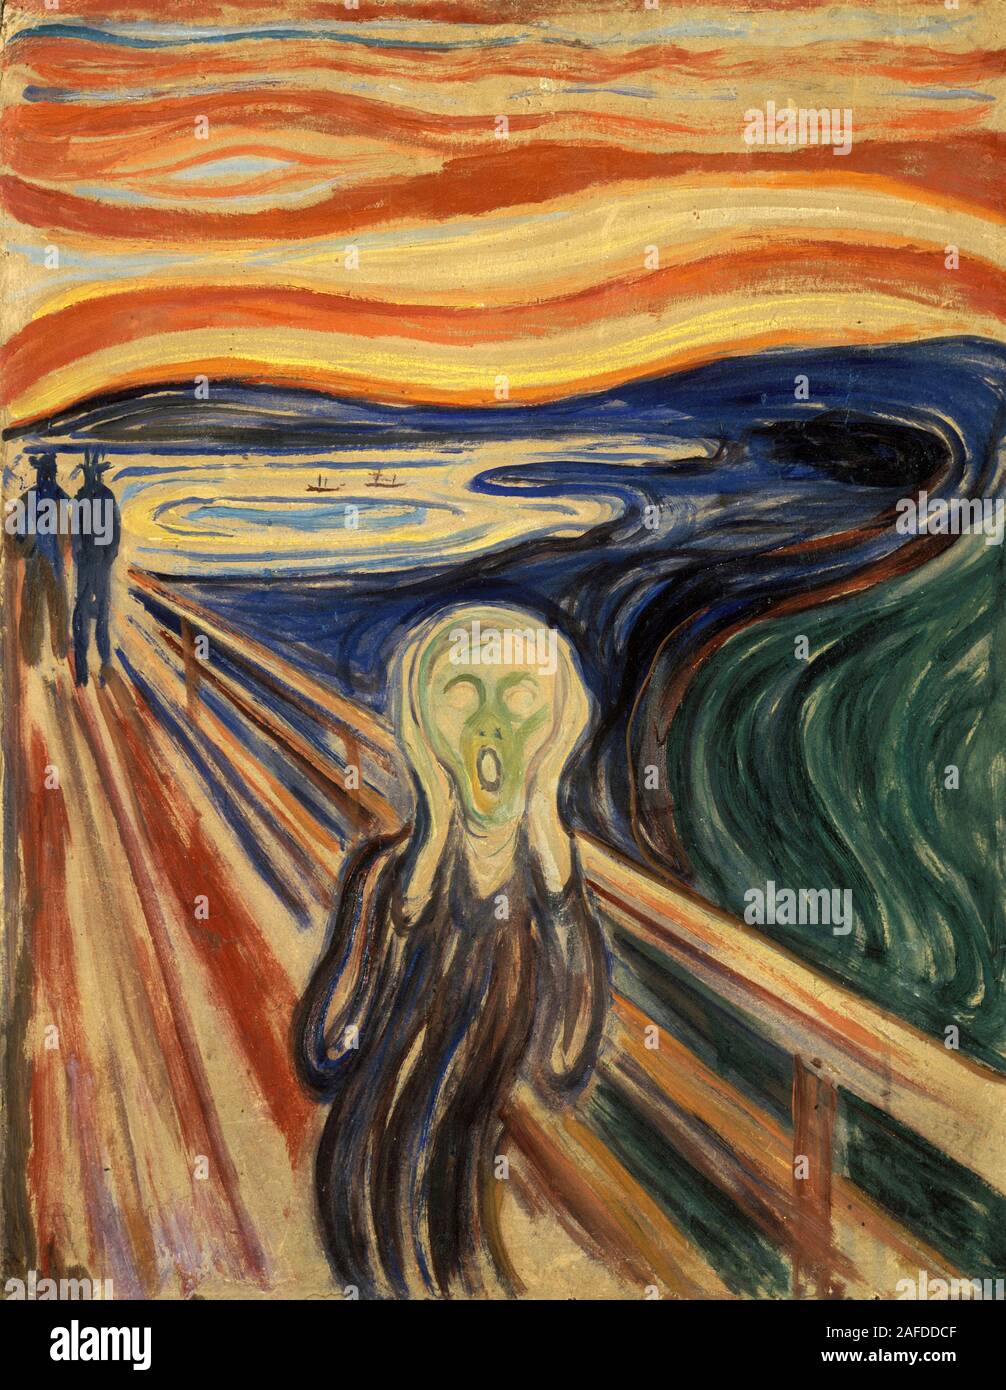 Edward or Edvard Munch 'The Scream' Stock Photo